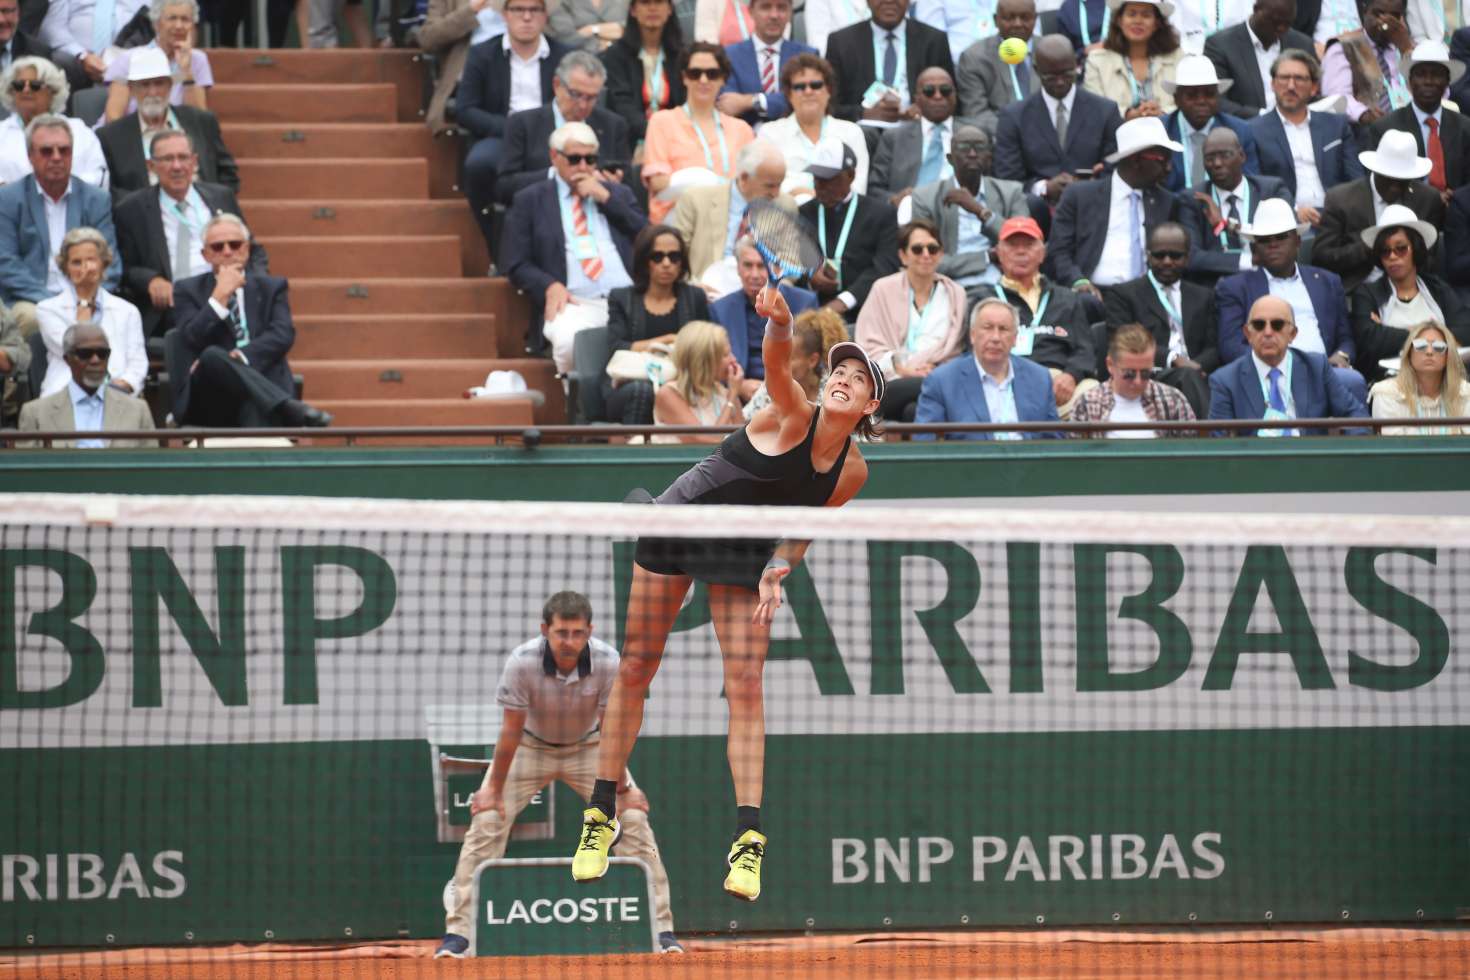 Maria Sharapova â€“ French Open Tennis Tournament 2018 in Paris